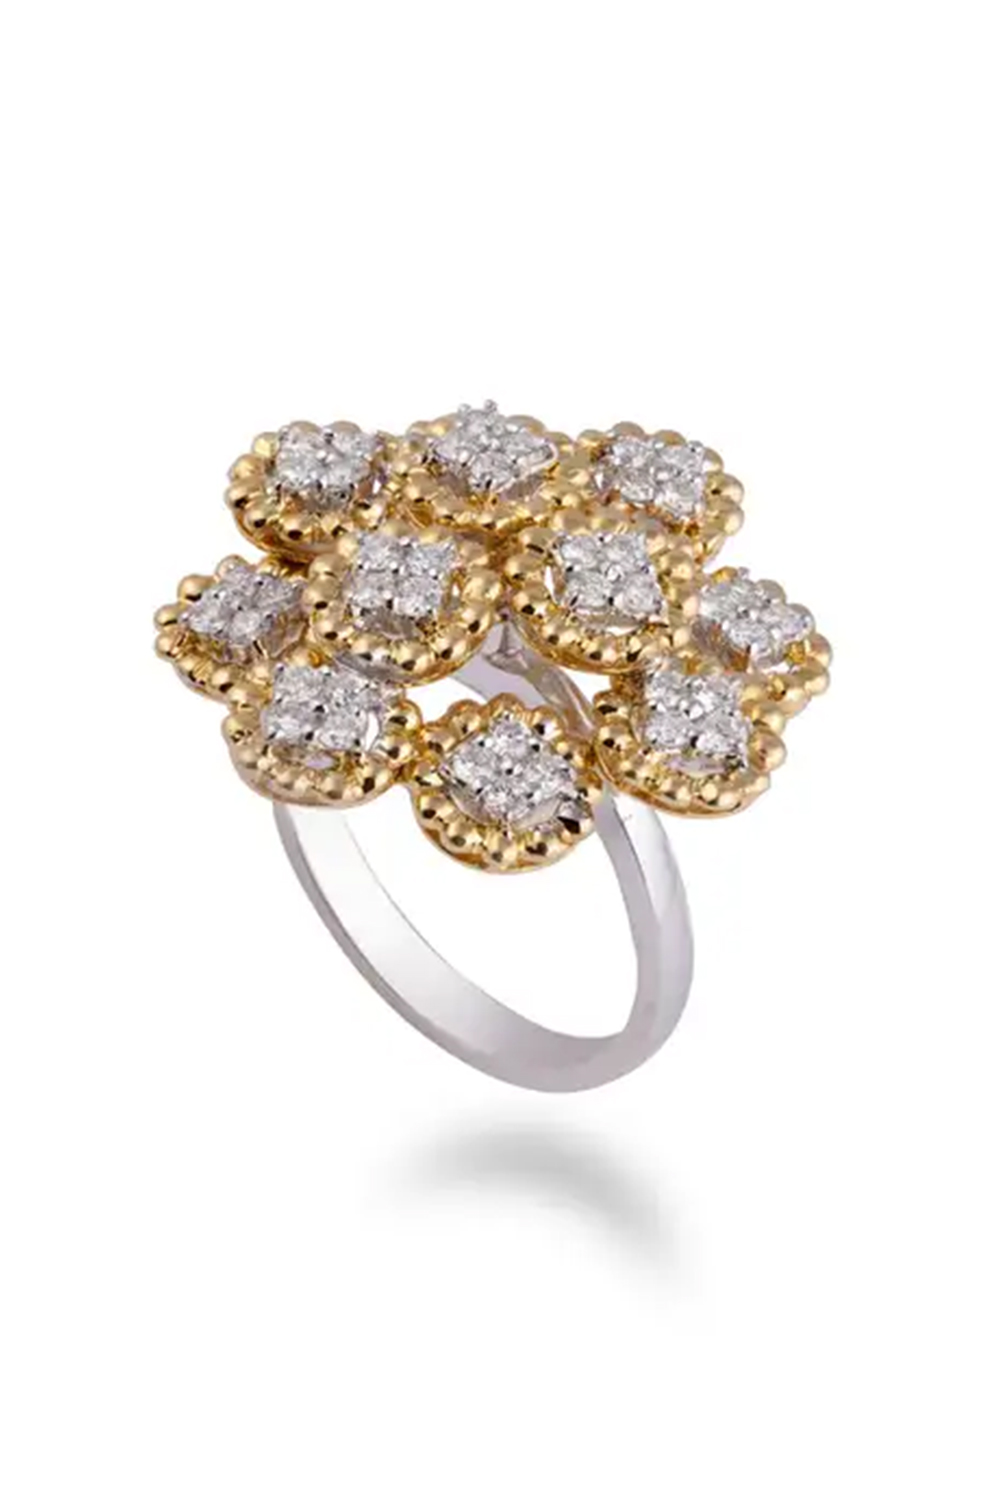 0.80cts Diamond gold Ring